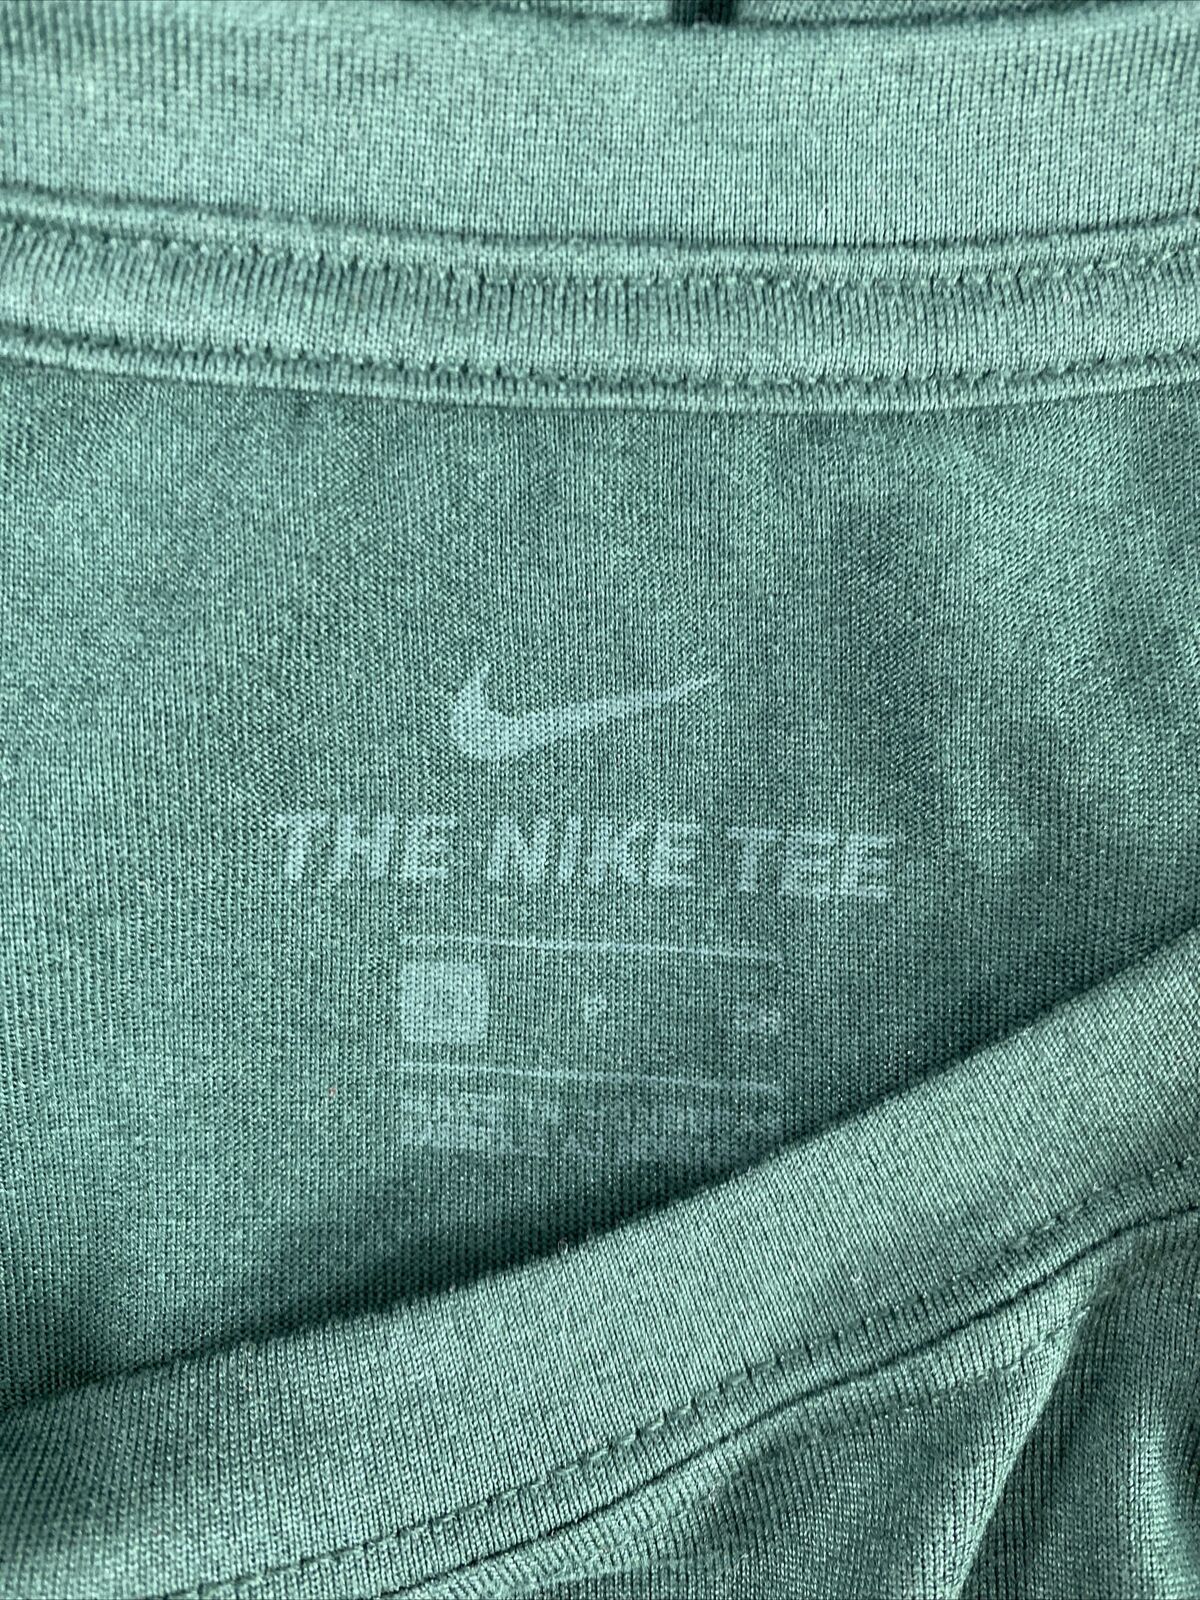 Nike Men's Green Short Sleeve Michigan State Graphic T-Shirt - S